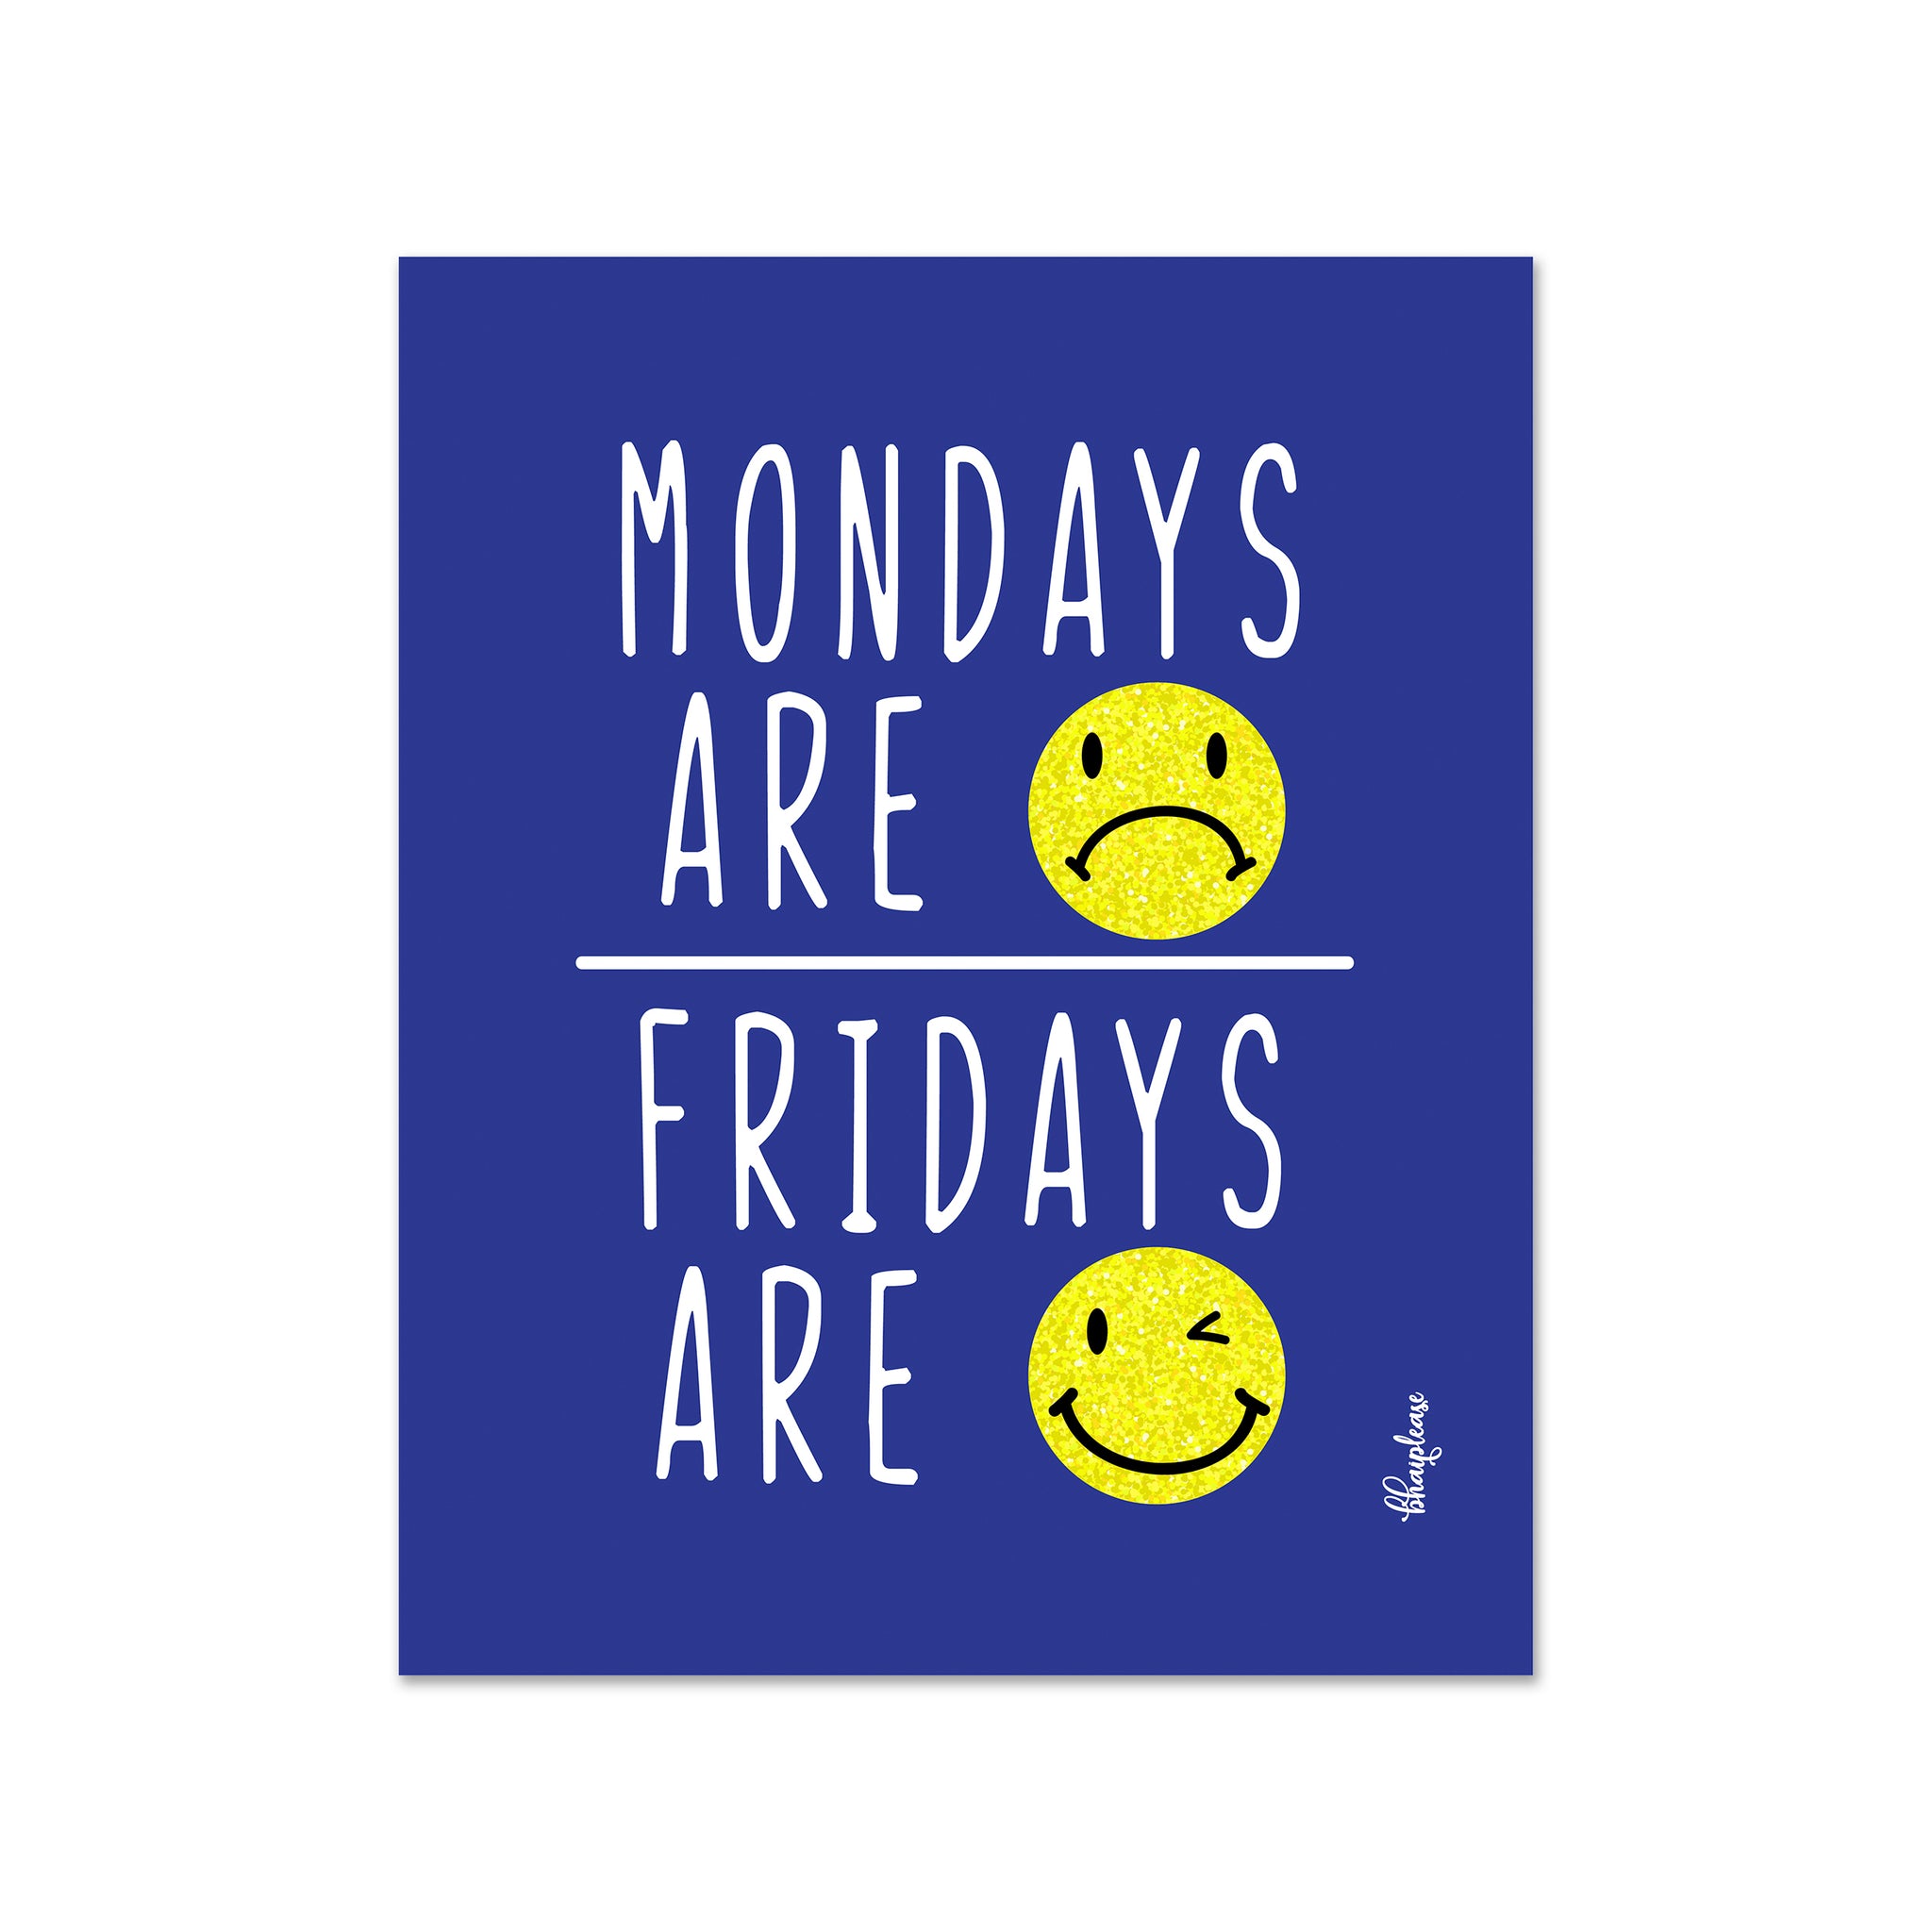 Mondays are - Fridays are Wooden Fridge / Refrigerator Magnet